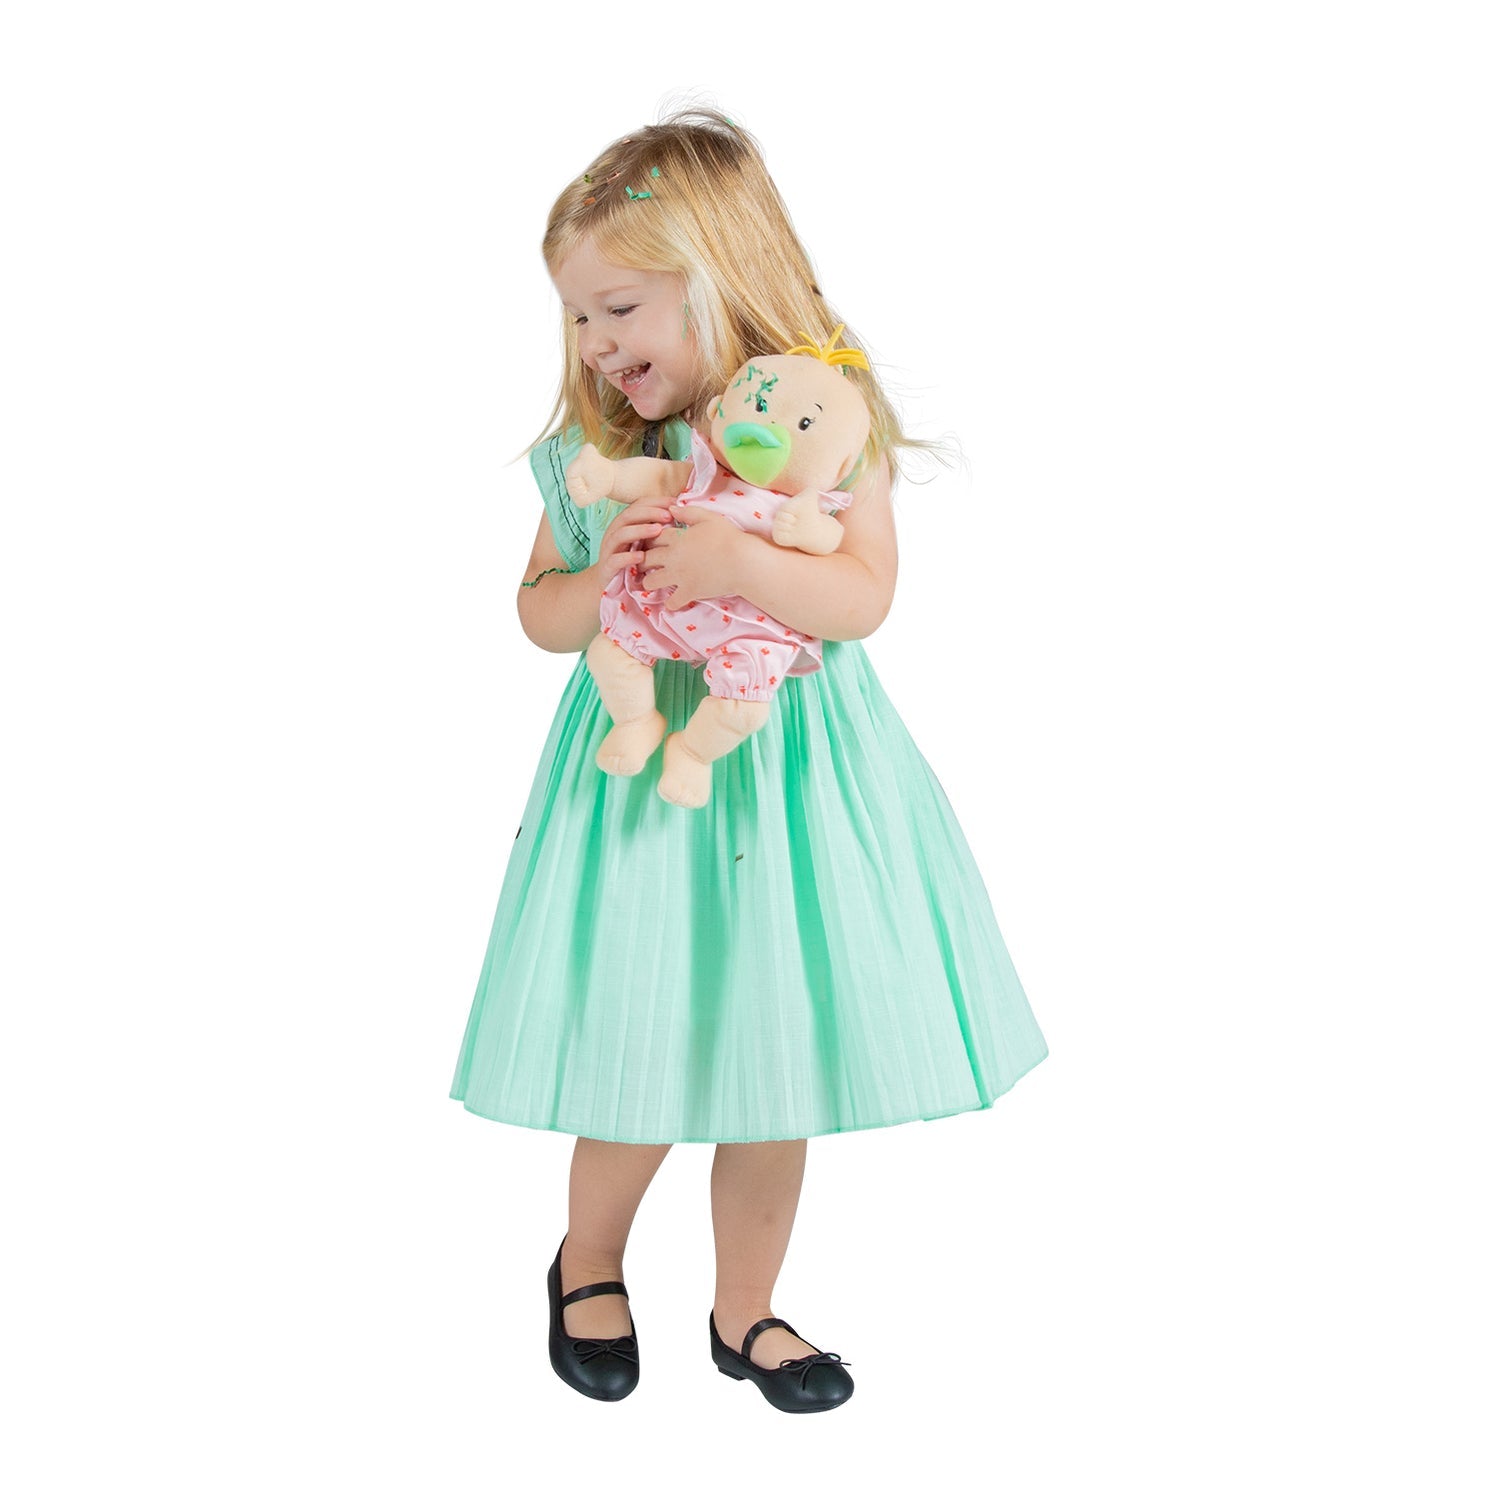 Baby Stella Peach Soft Plush Baby Doll with Blonde Hair